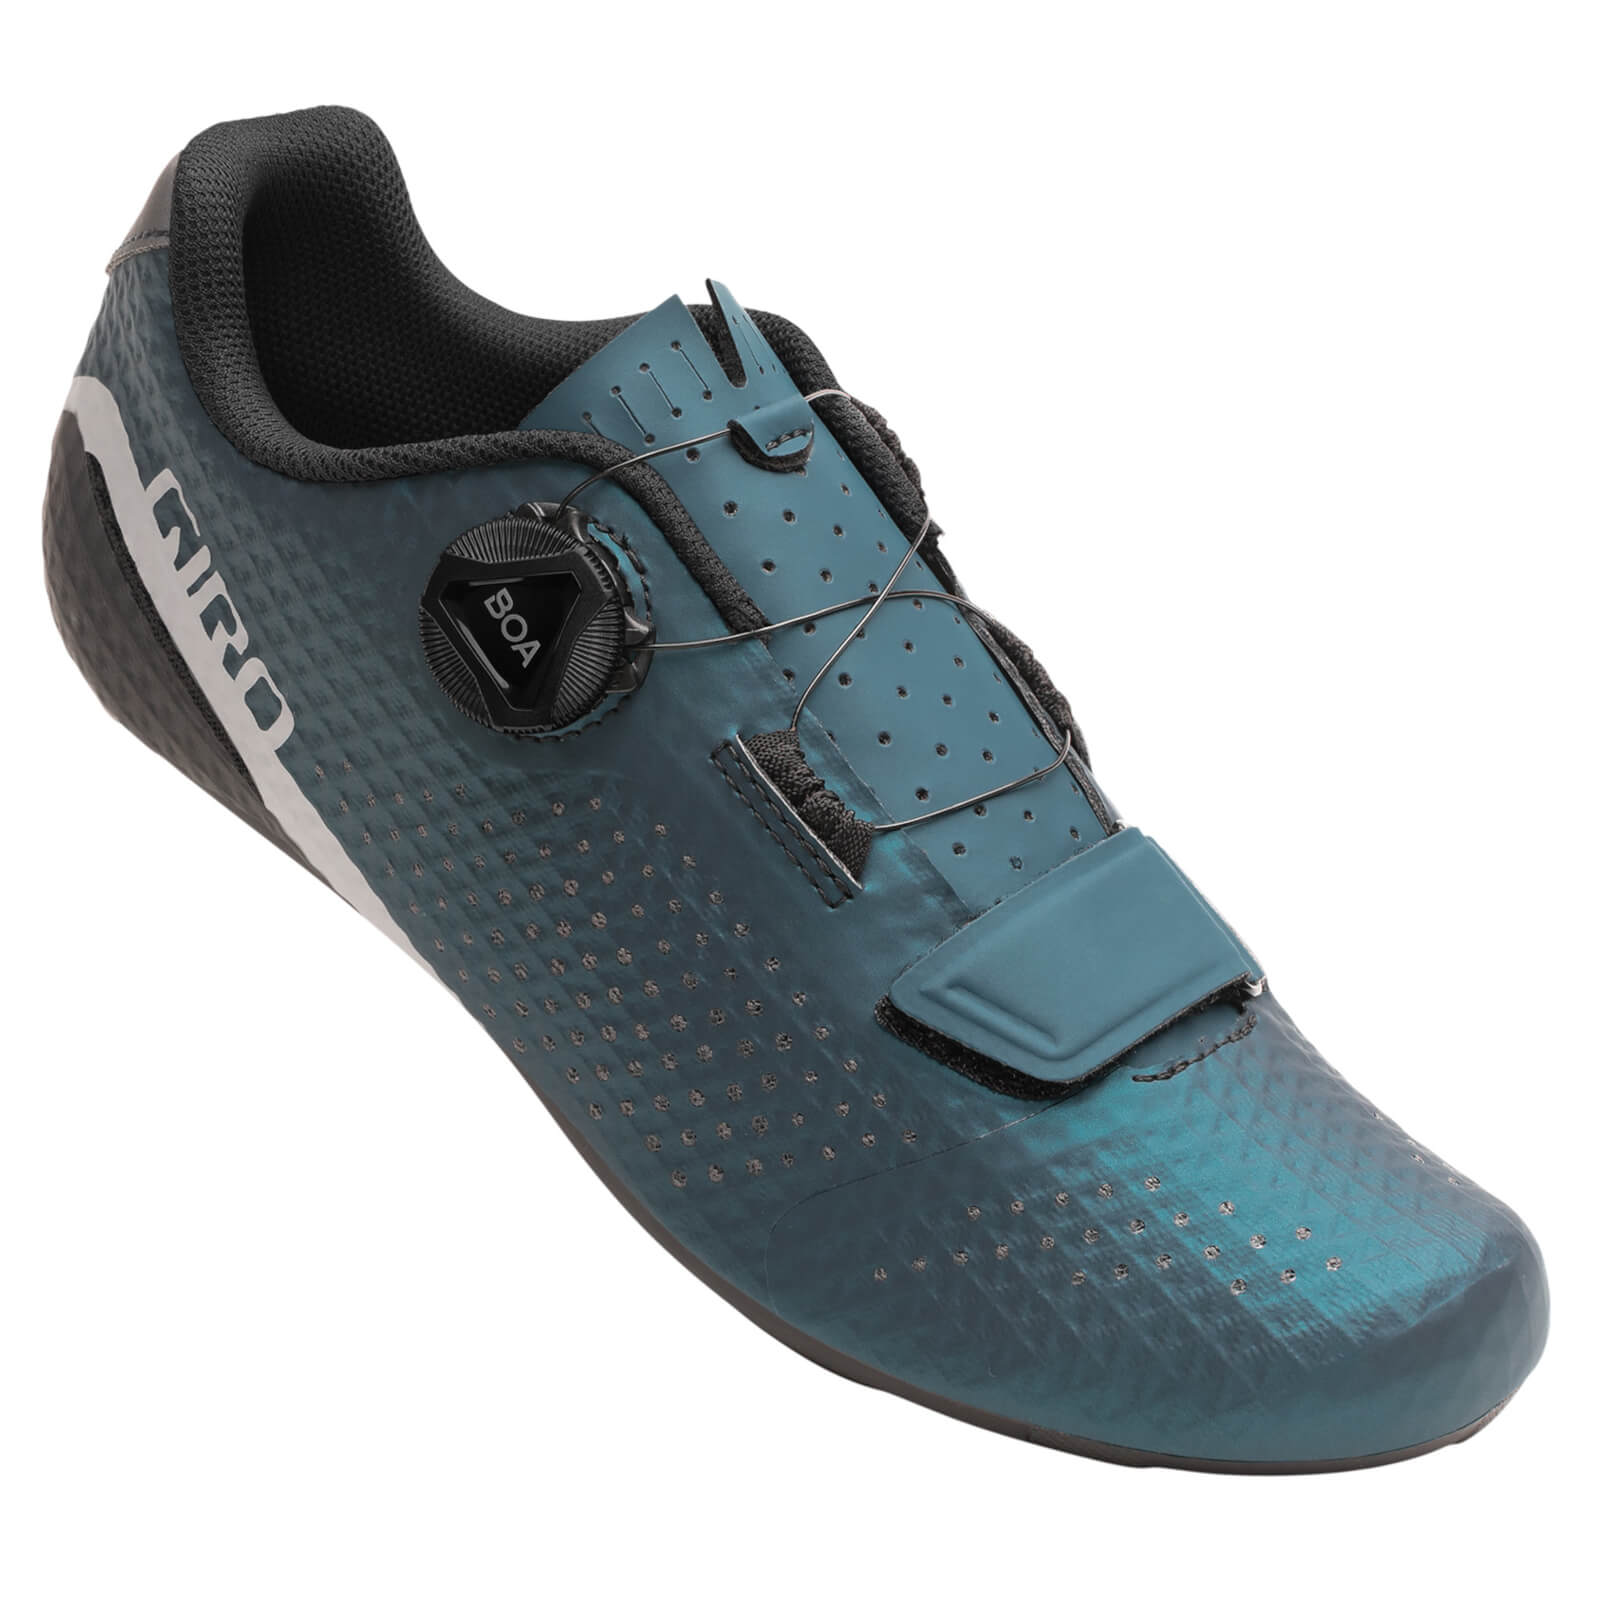 Giro Cadet Road Shoes - 44 - Harbour Blue